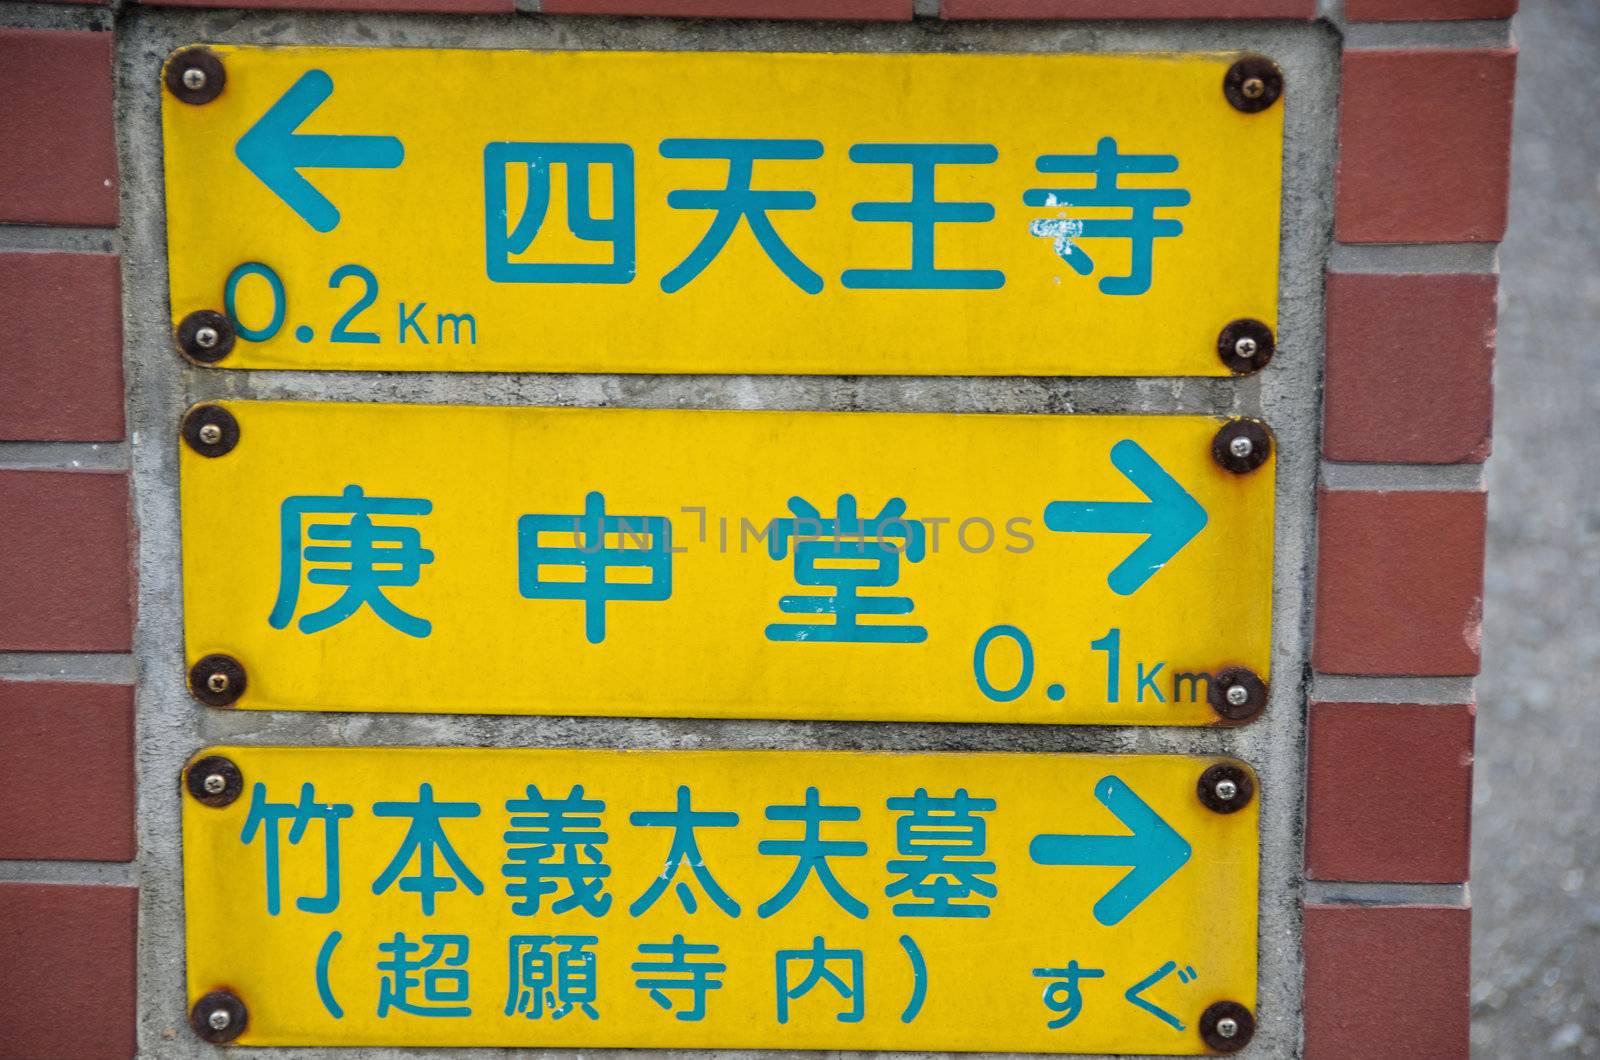 Japanese street signs for pedestrians in Osaka, Japan